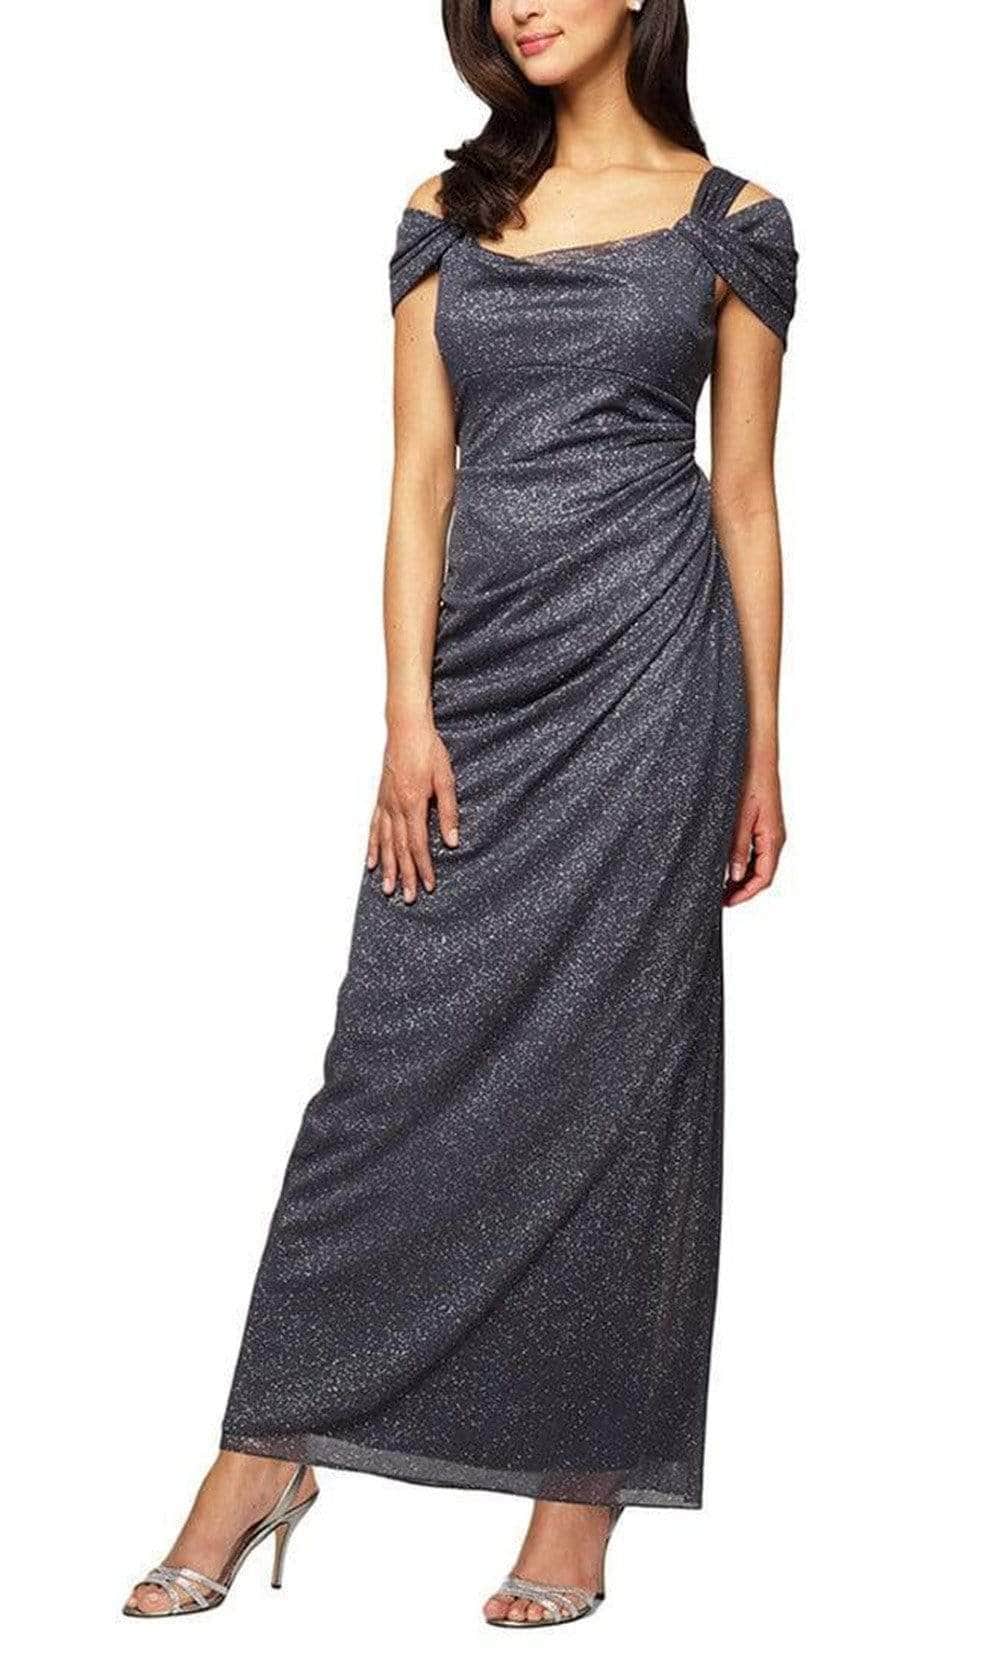 Alex Evenings - Draped Glitter Sheath Evening Dress 233026 - 1 pc Smoke In Size 14P Available CCSALE 14P / Smoke